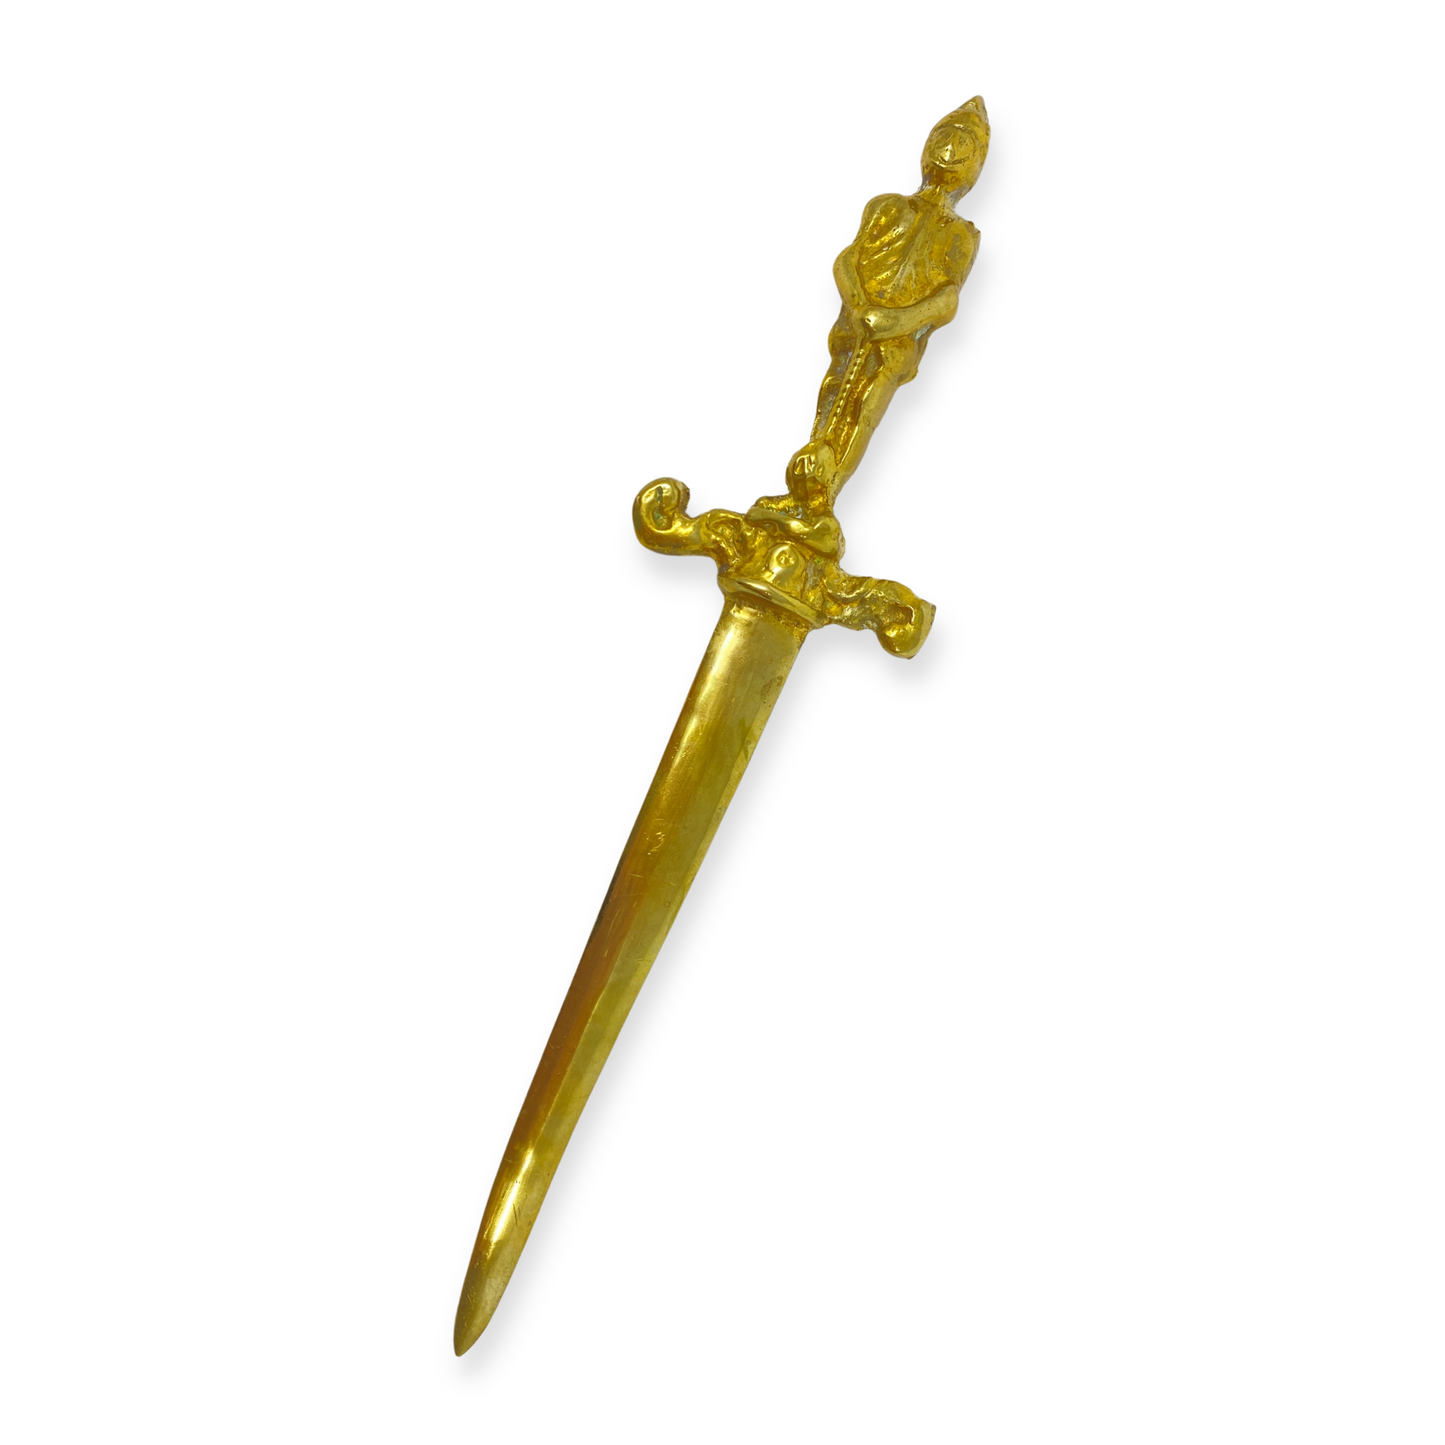 Solid Brass Medieval Soldier Letter Opener